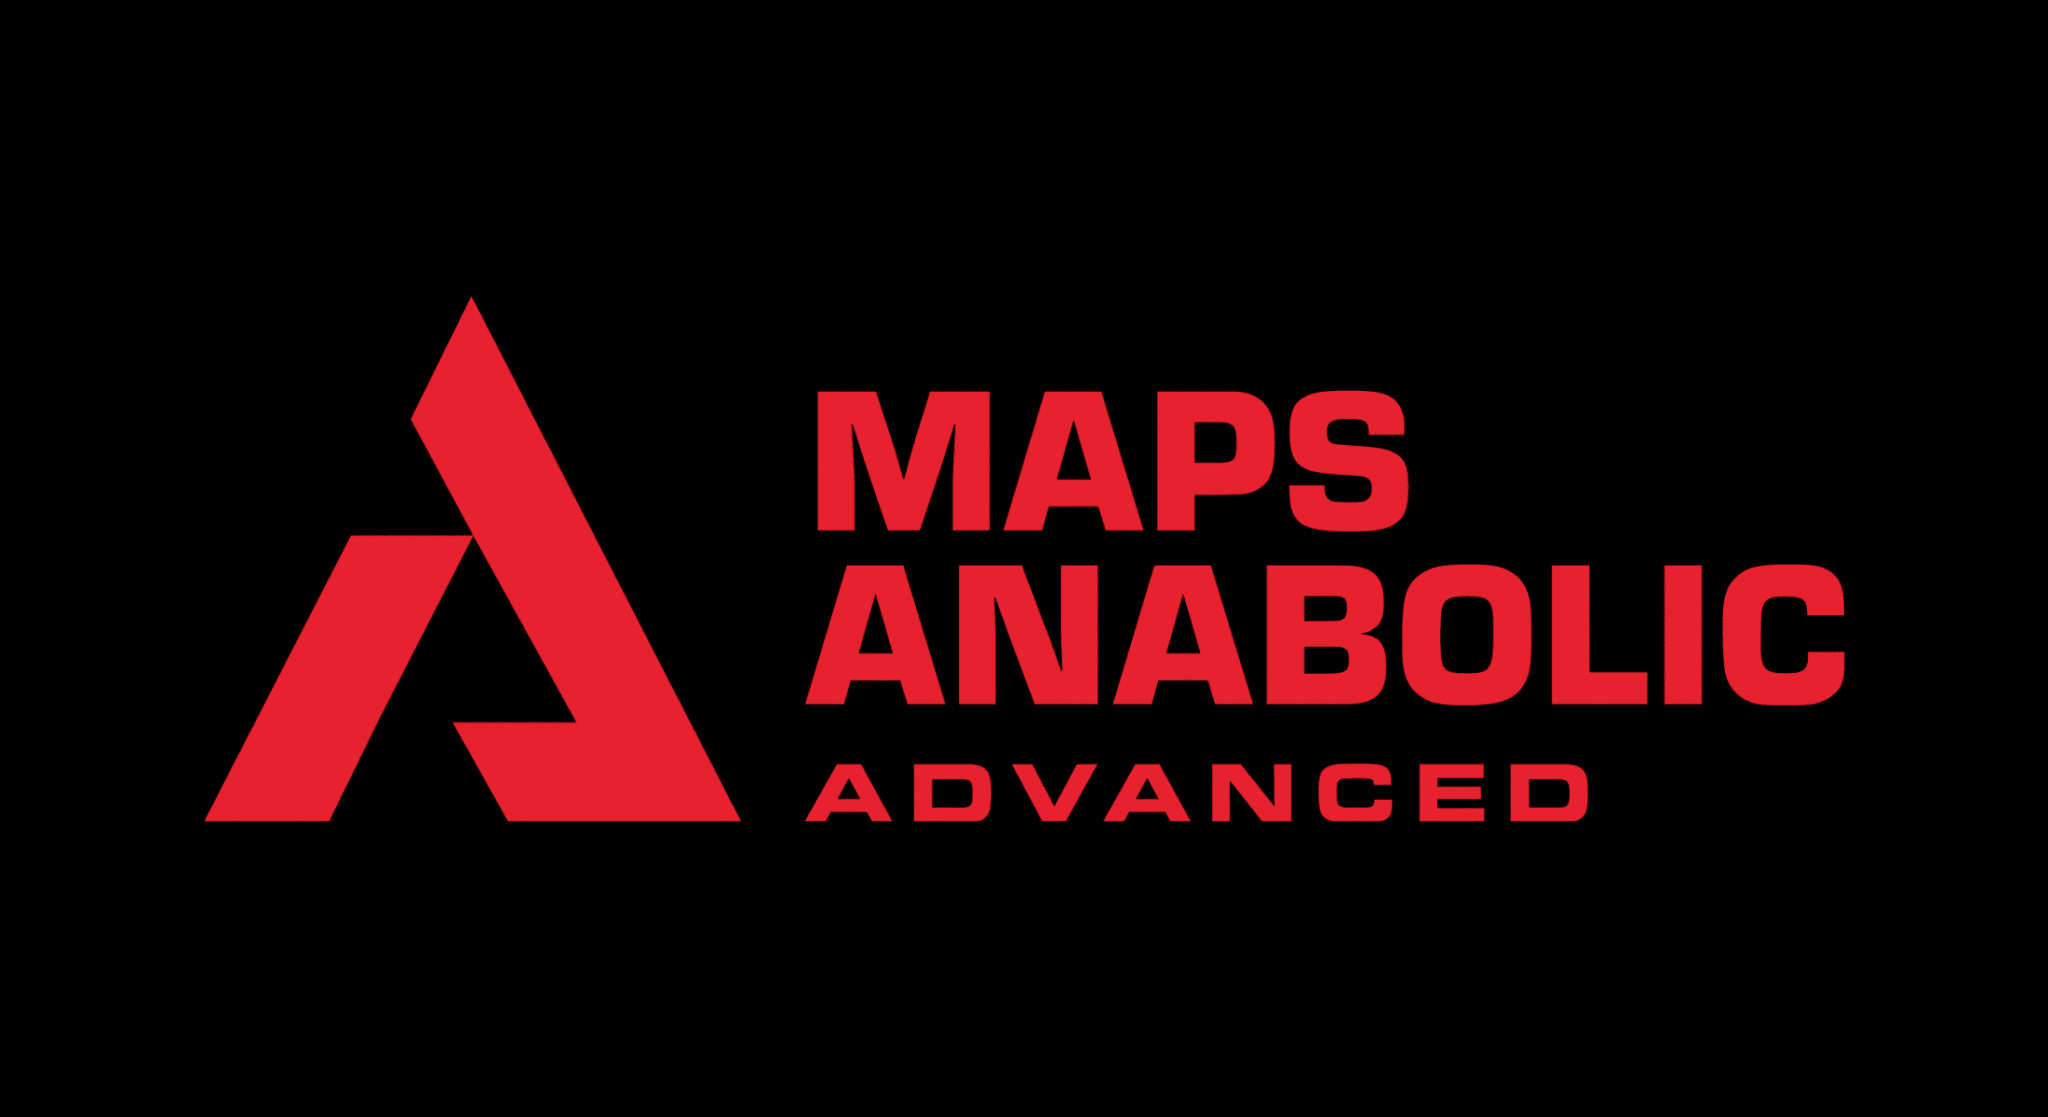 MAPS Anabolic Advanced